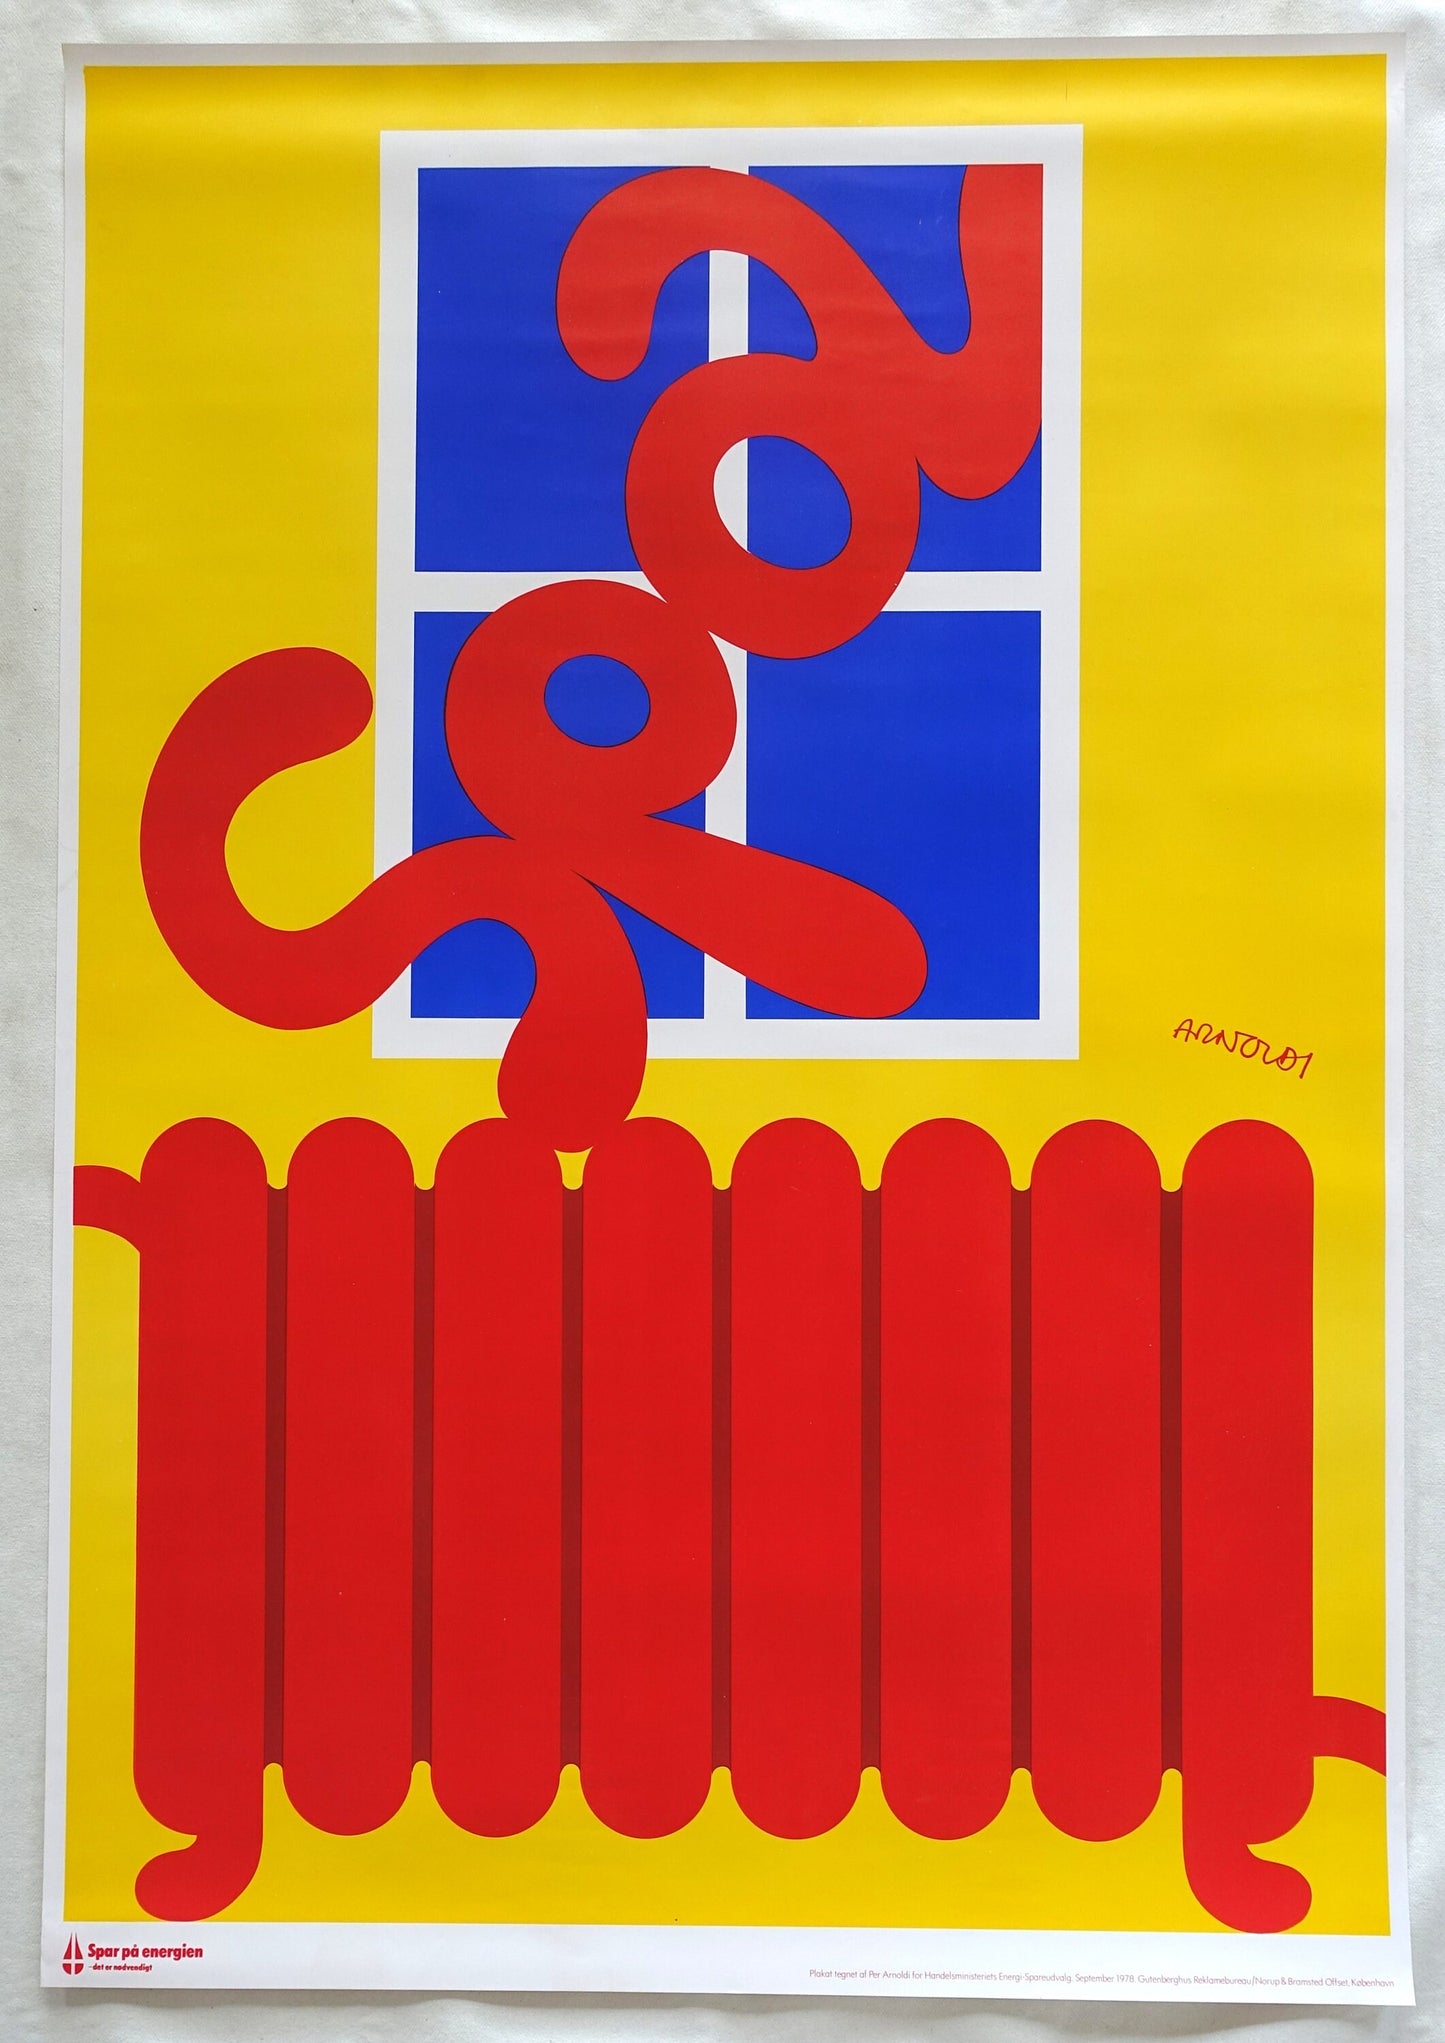 1978 Save Energy Campaign by Per Arnoldi (radiator) - Original Vintage Poster